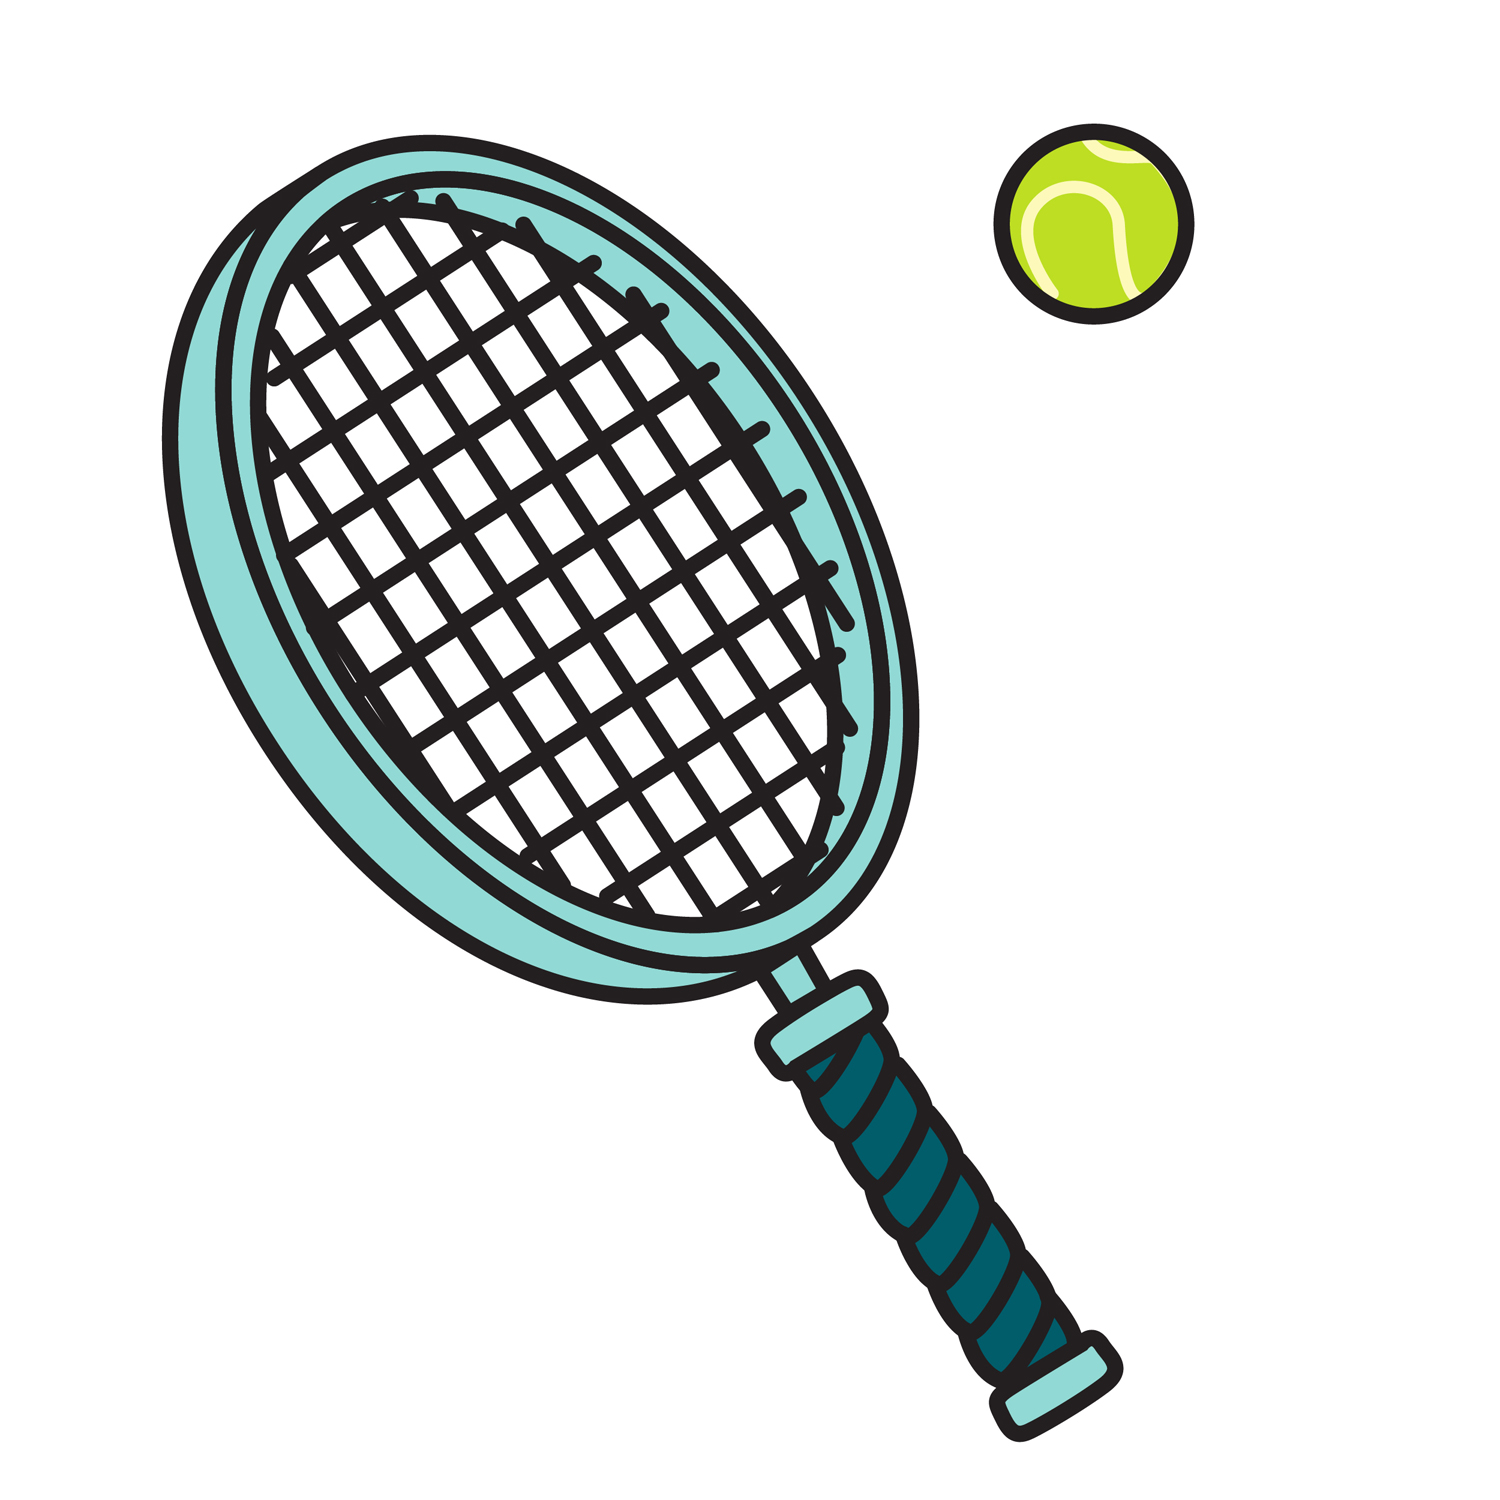 16 Tennis Racquet Vector Images - Tennis Racket Vector, Tennis ...